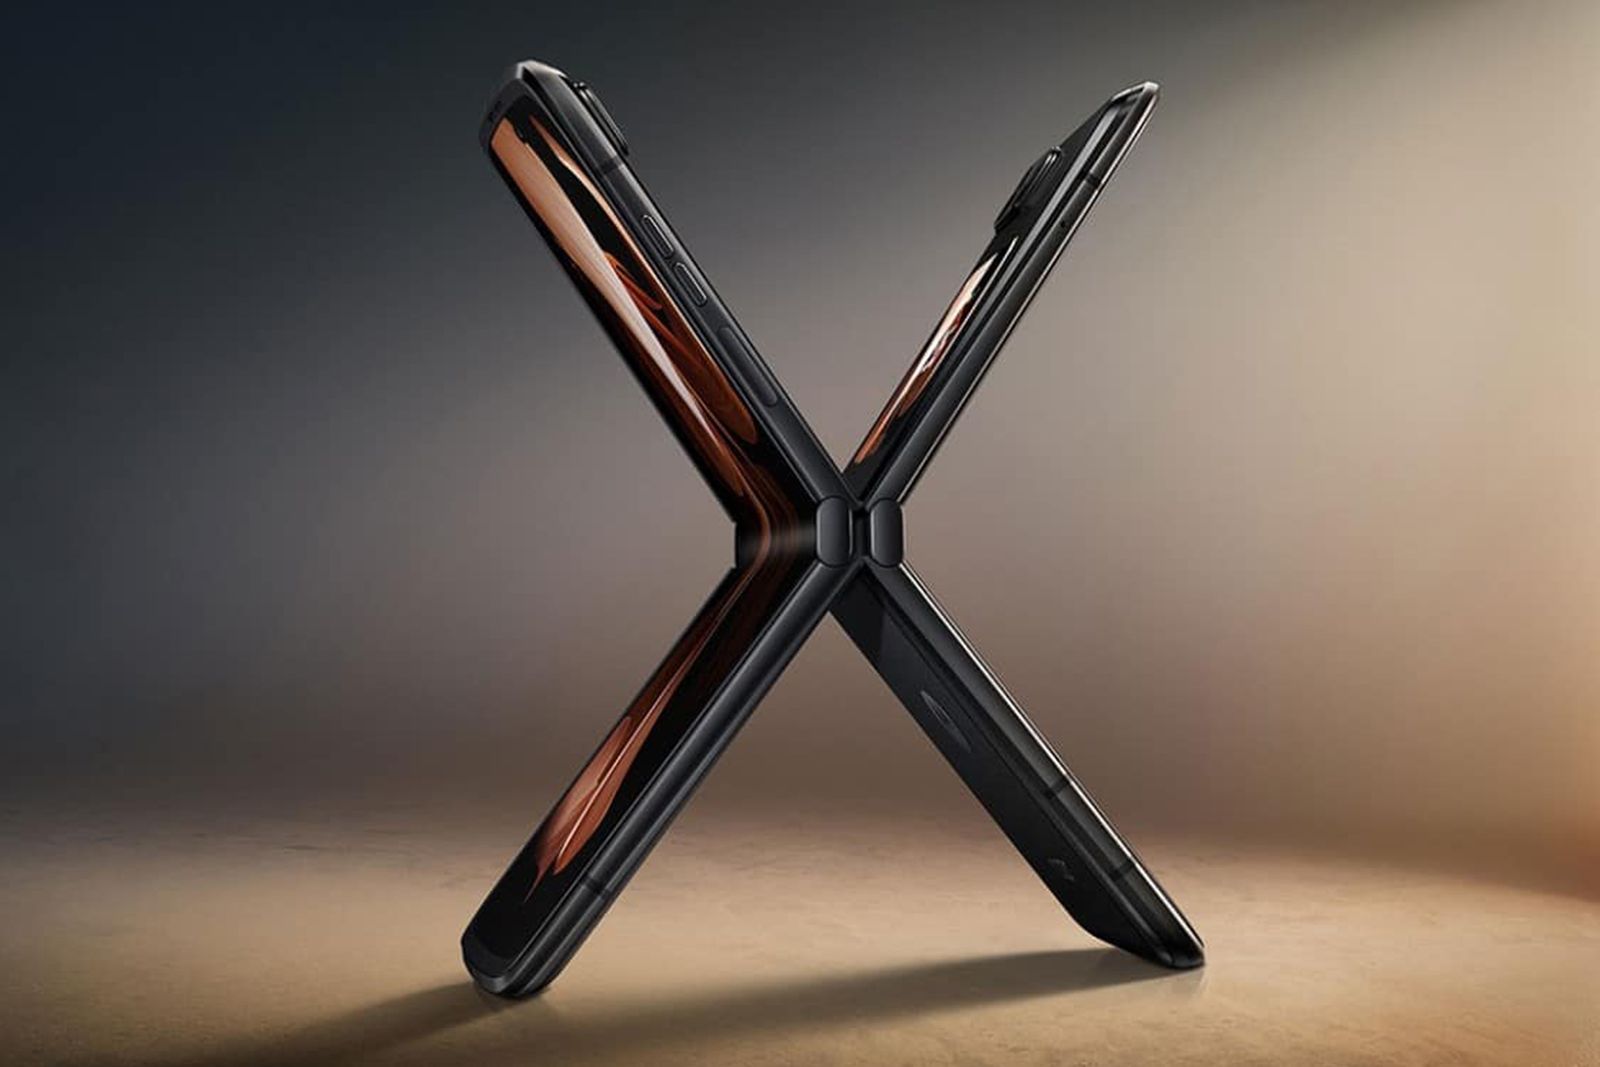 Two Motorola Razr phones making an X shape